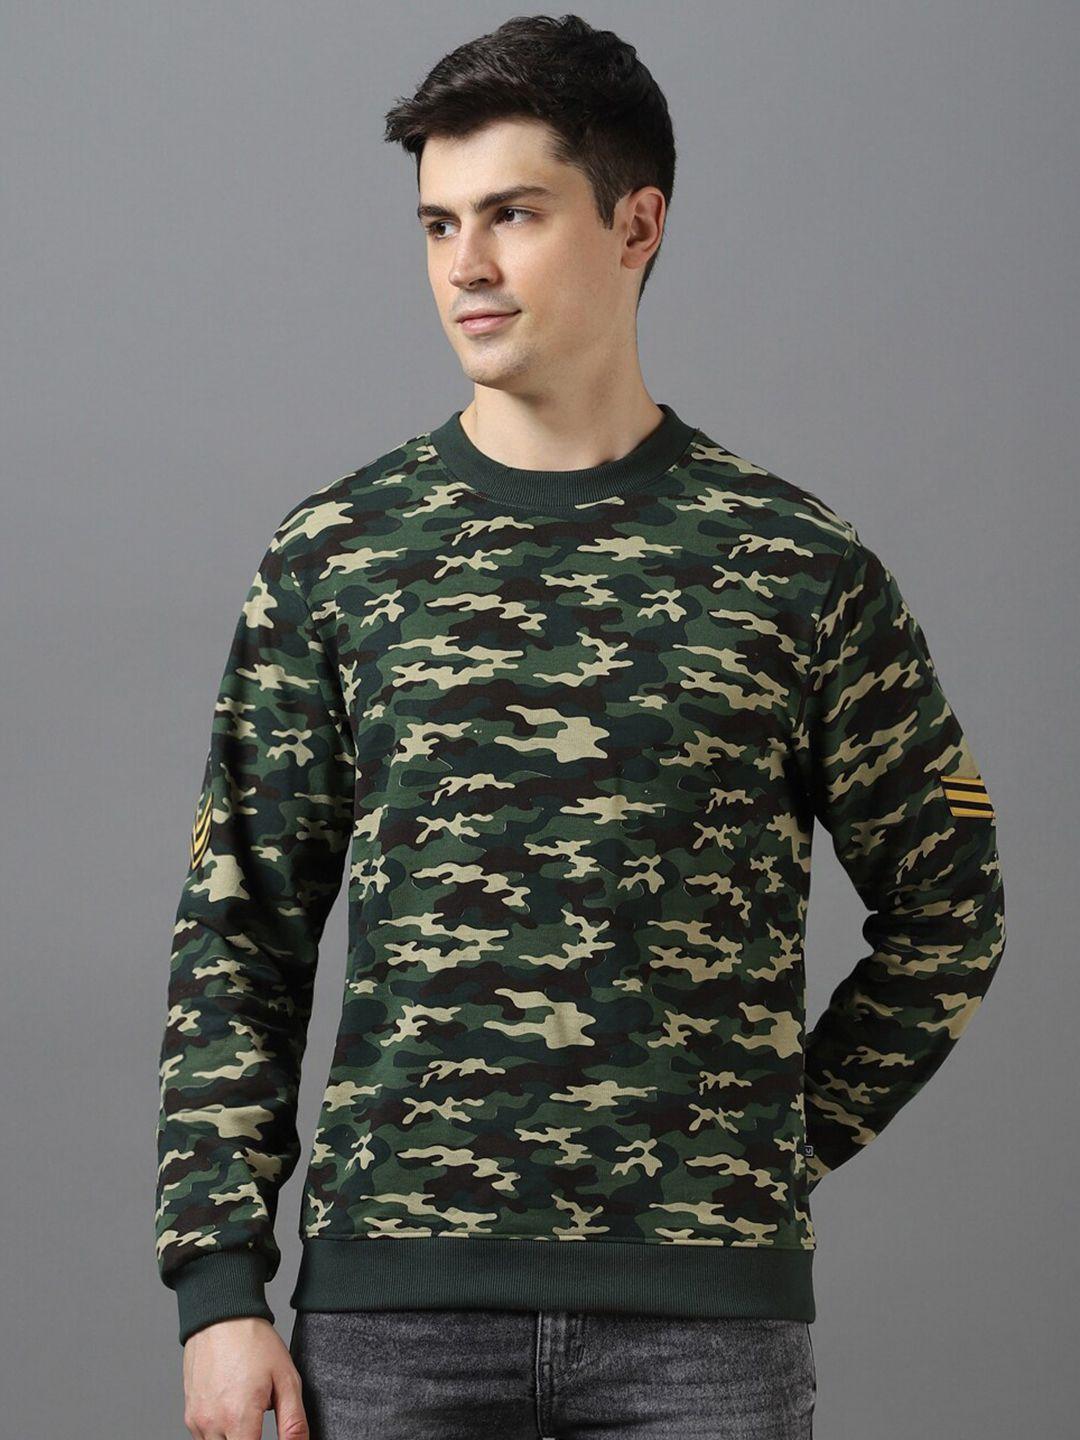 urbano fashion camouflage printed pullover sweatshirt